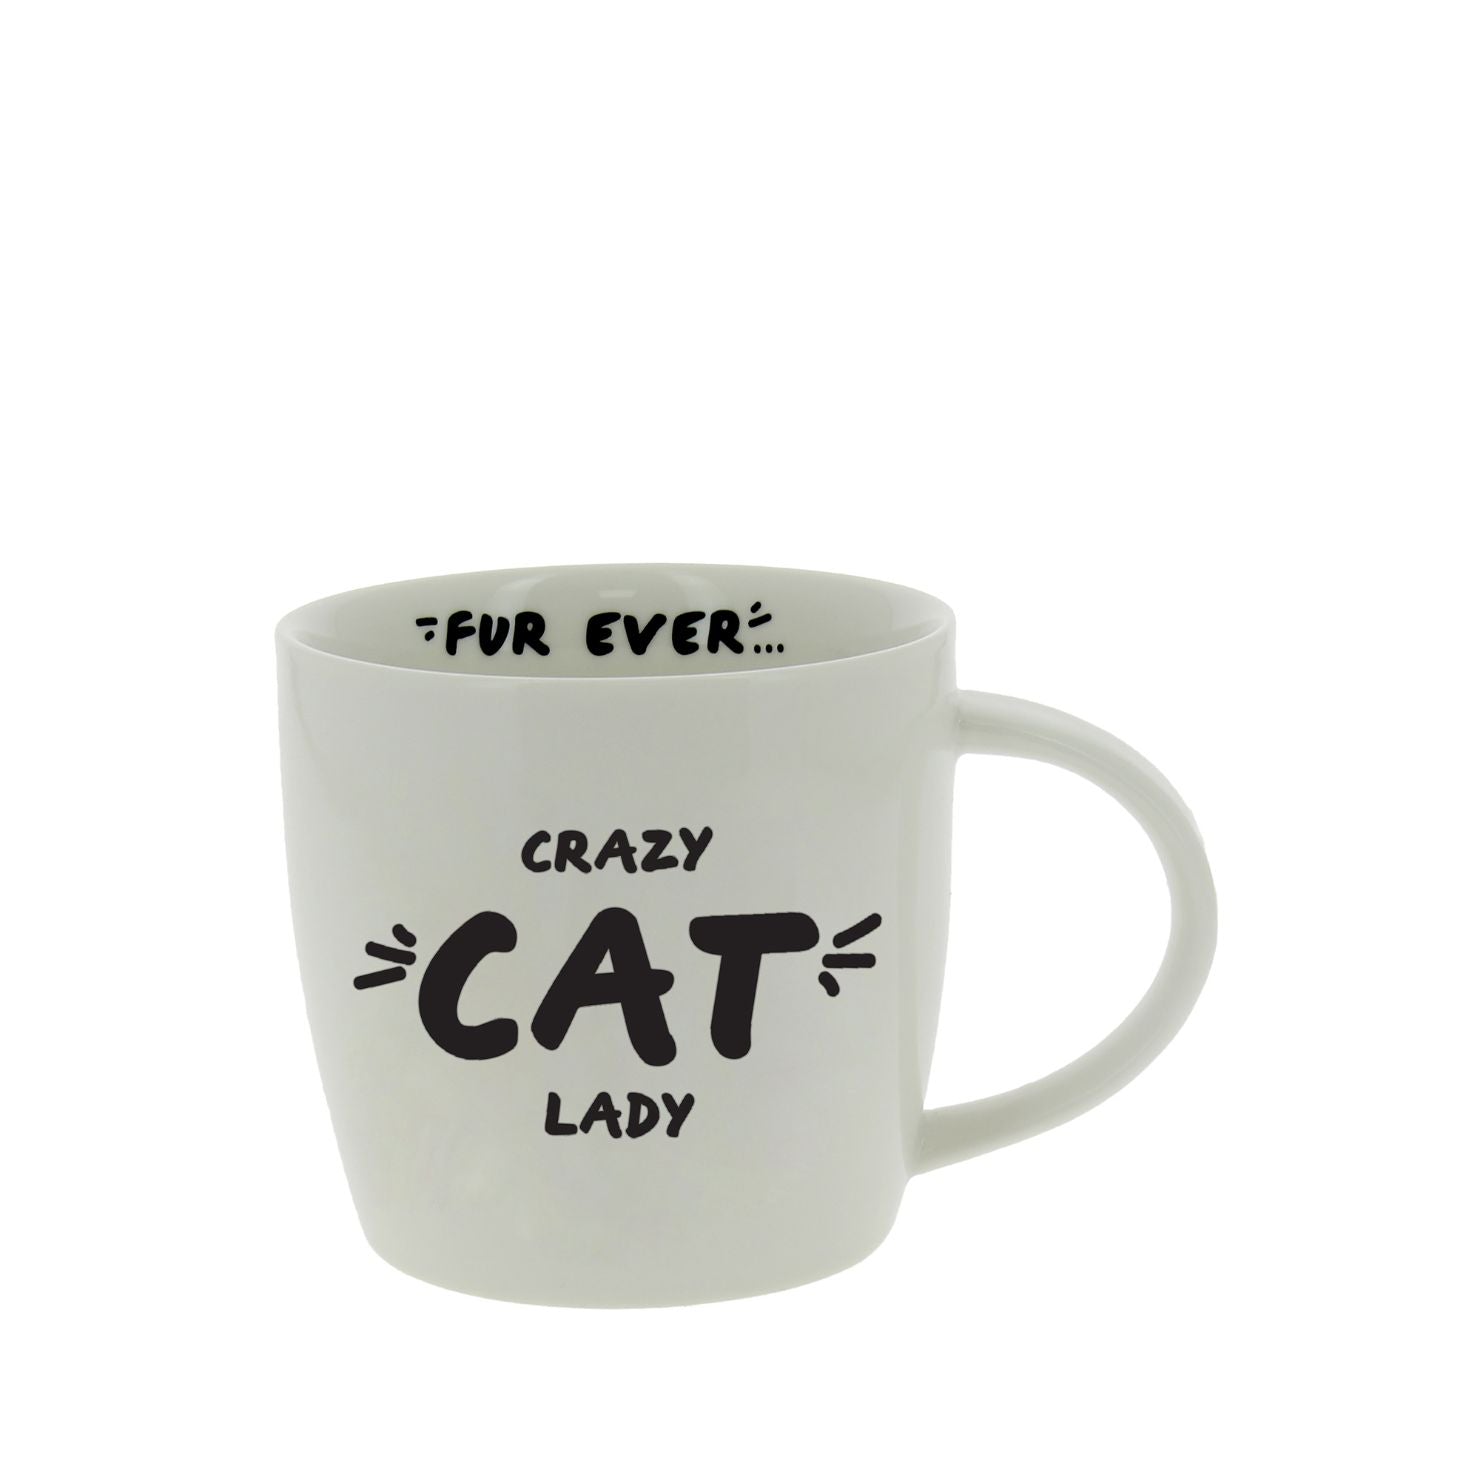 Crazy cat lady mug xl dishwasher safe stoneware best in show